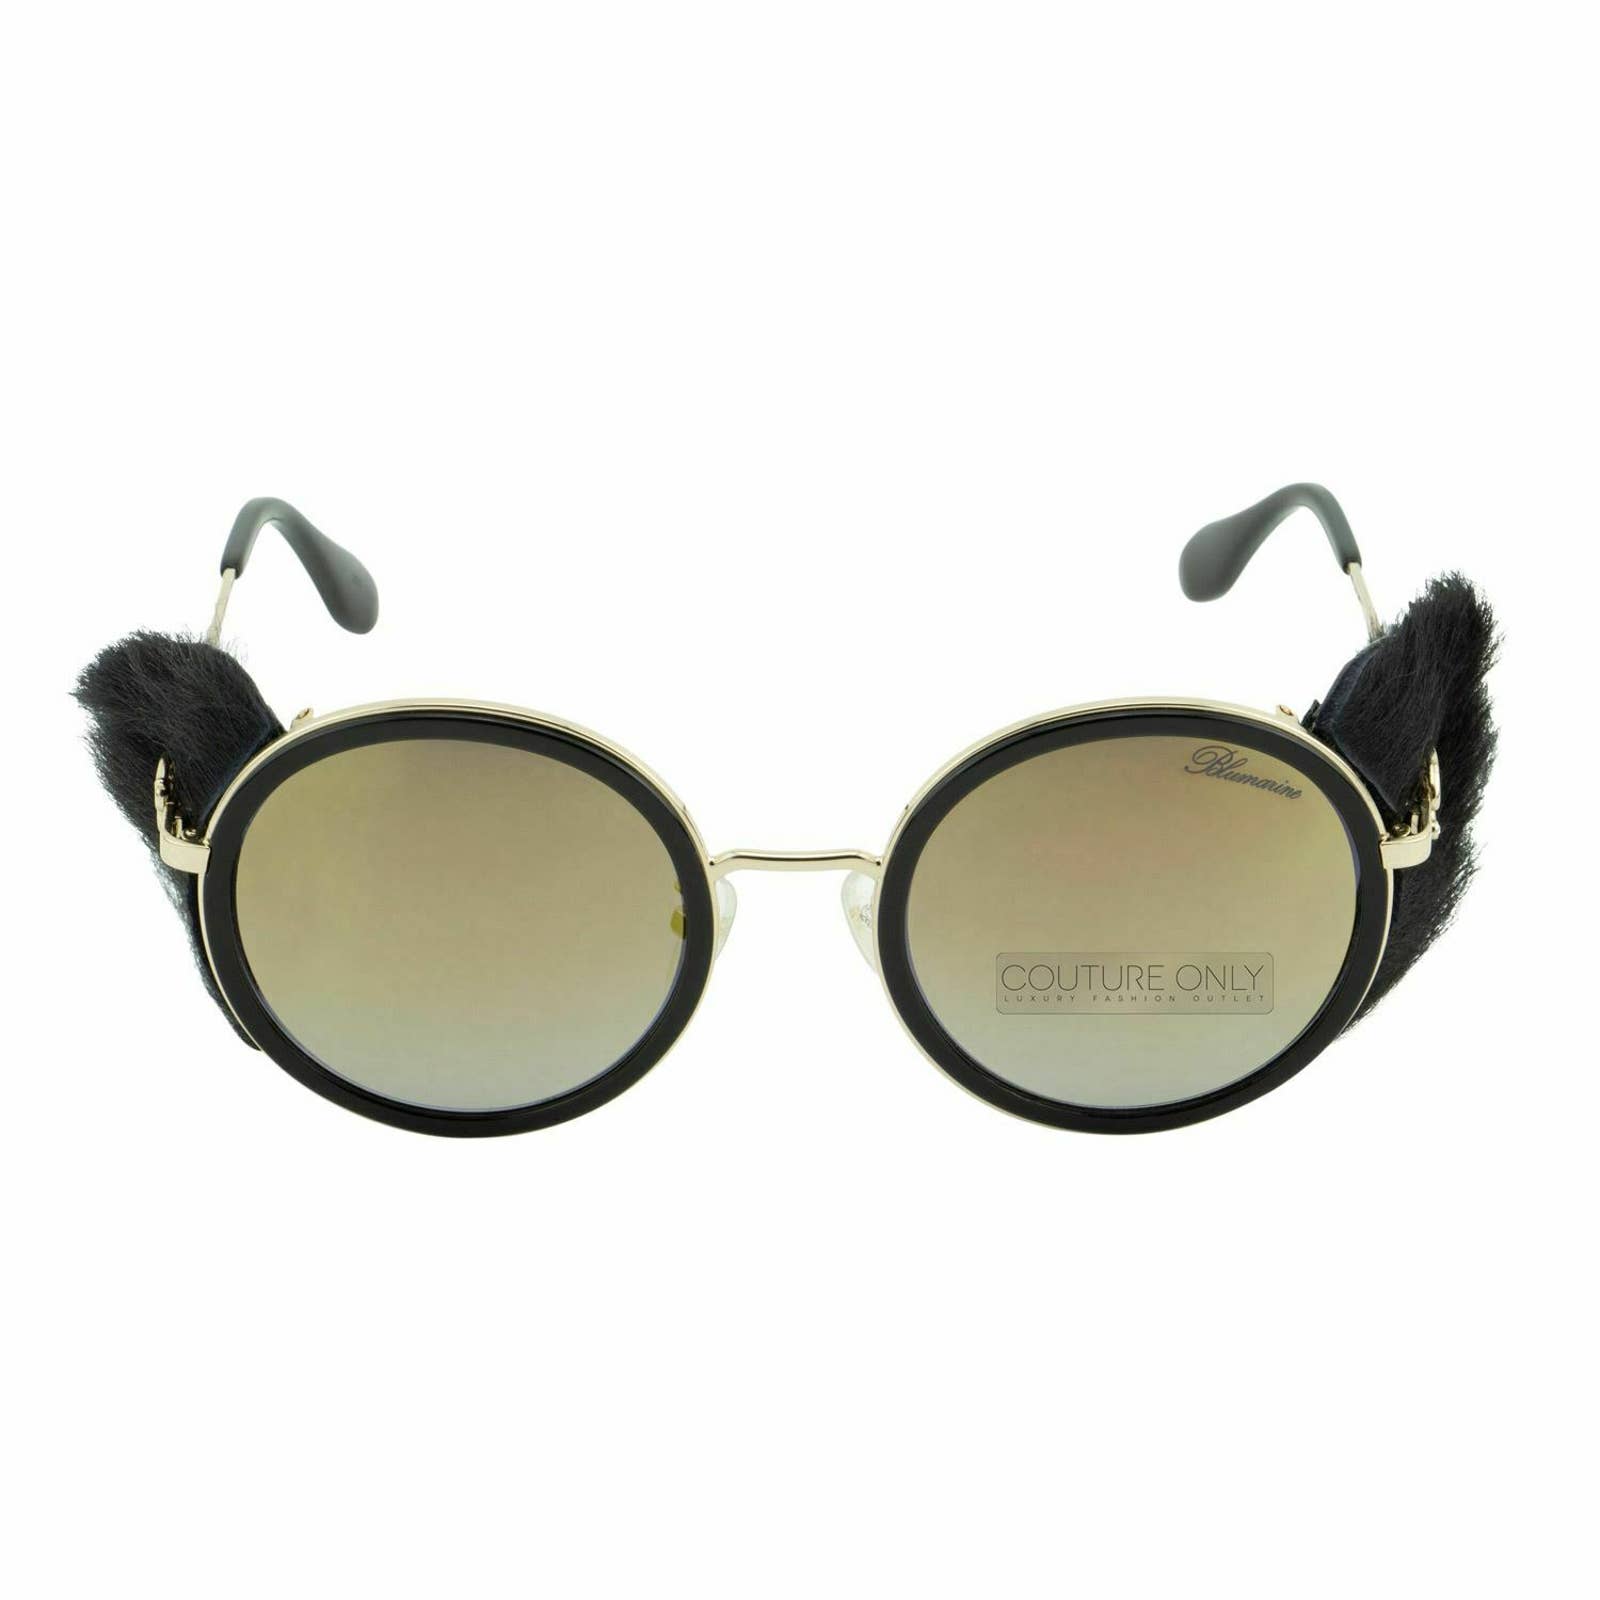 Limited Edition Blumarine 40th Anniversary Round Sunglasses